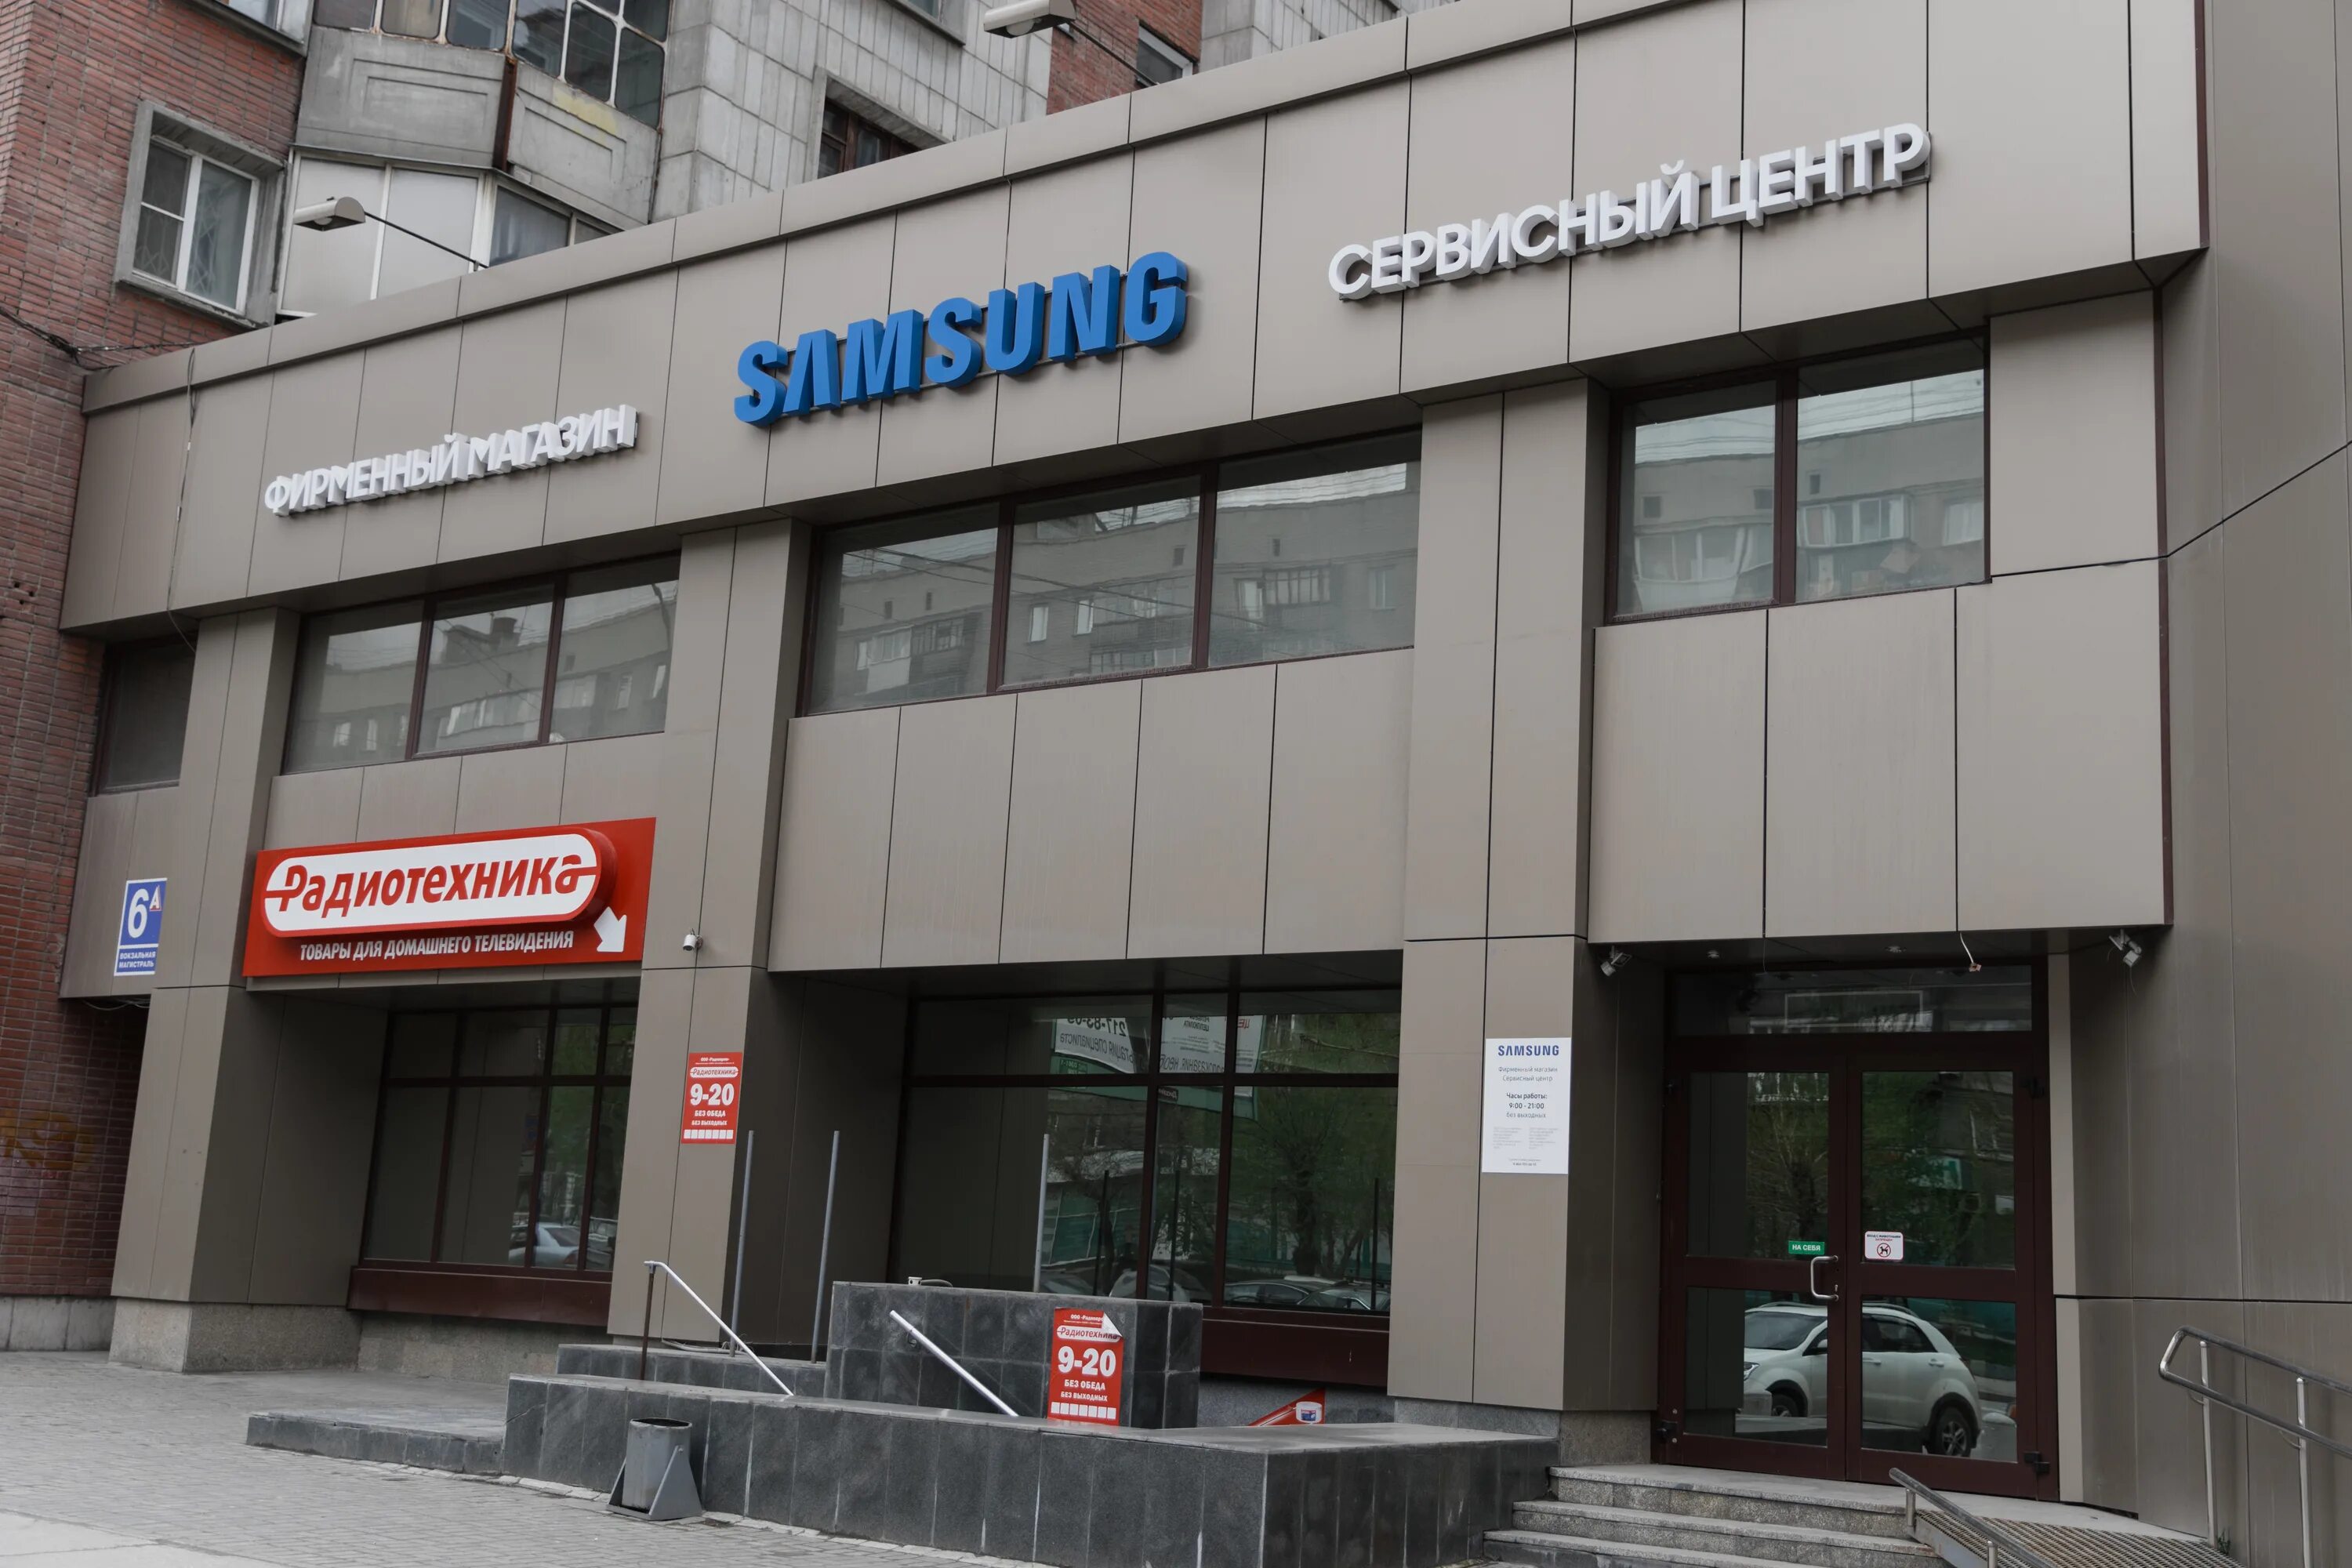 Сервисный центр. Сервисный центр самсунг в Новосибирске. Samsung сервис центр. СЦ Samsung. Самсунг сервисный центр remservice